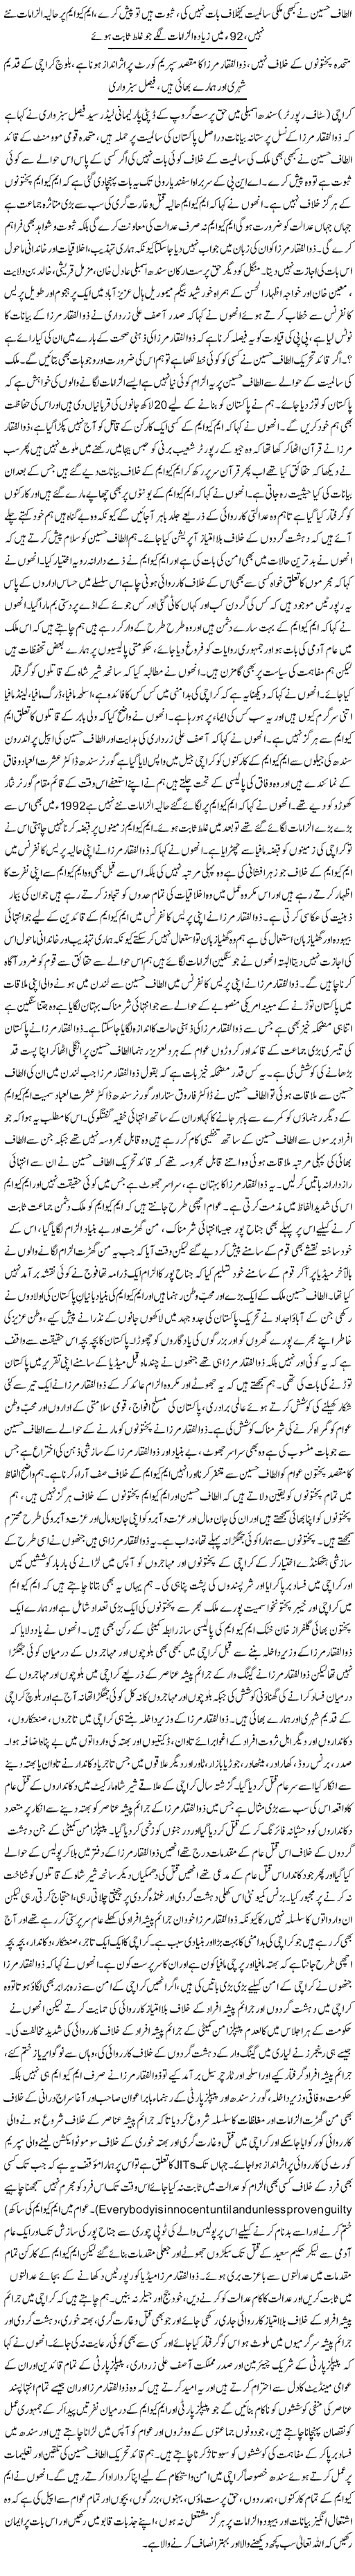 Blame Game Between Zulfiqar Mirza and MQM